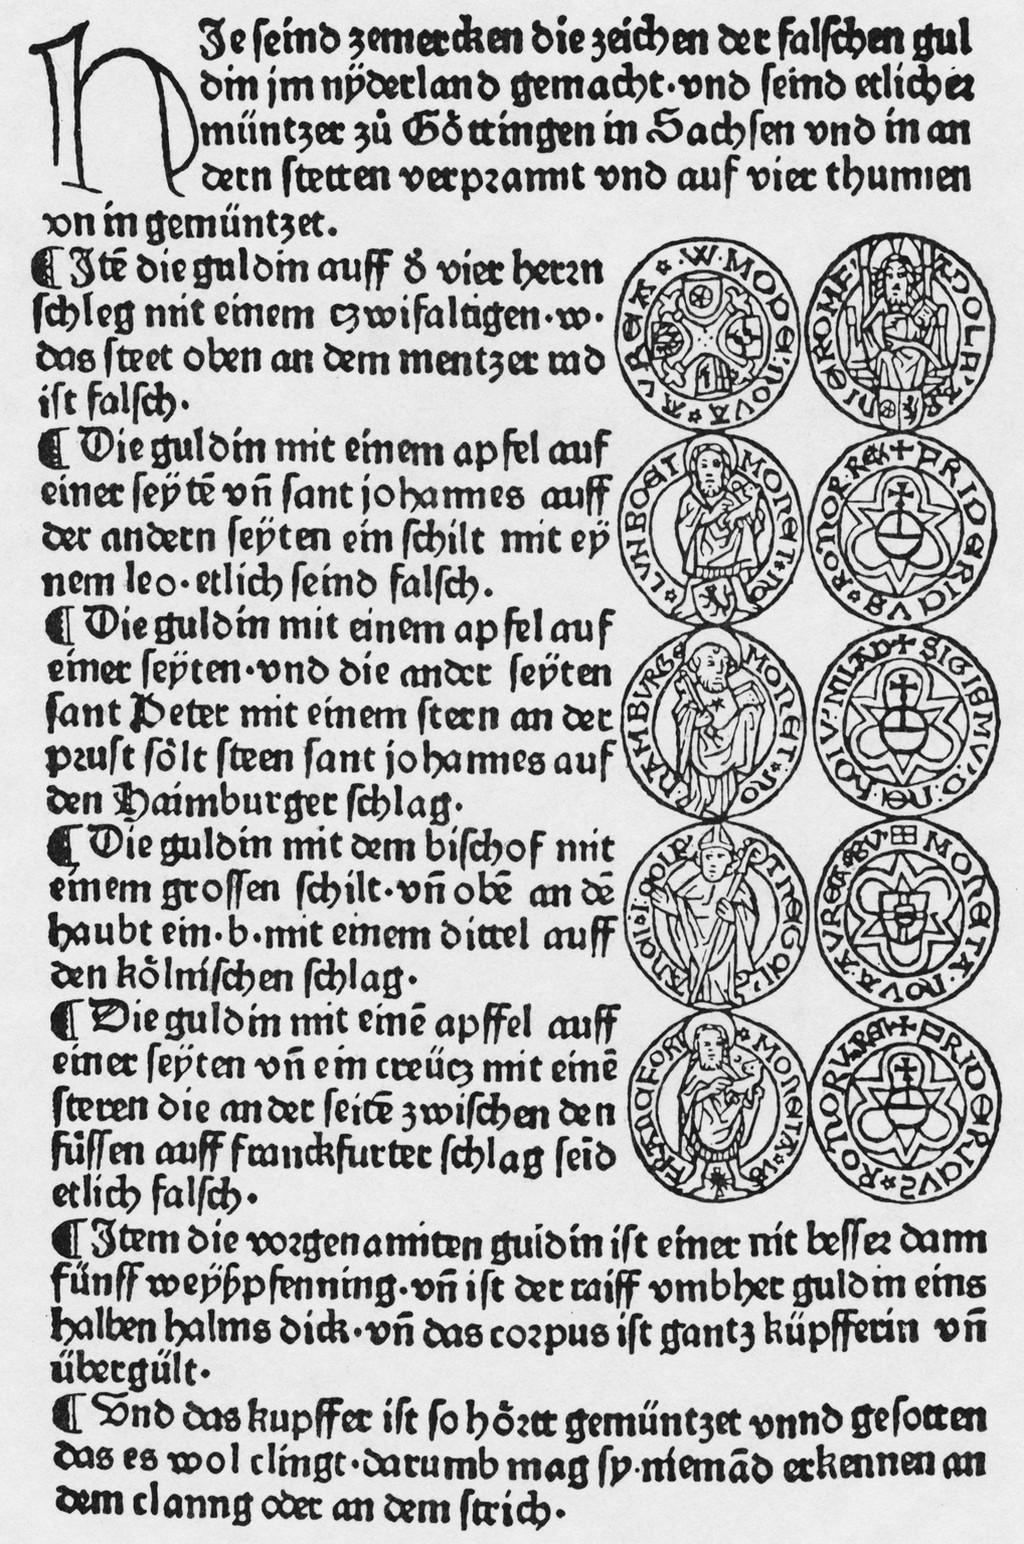 German manuscript of counterfeit coins